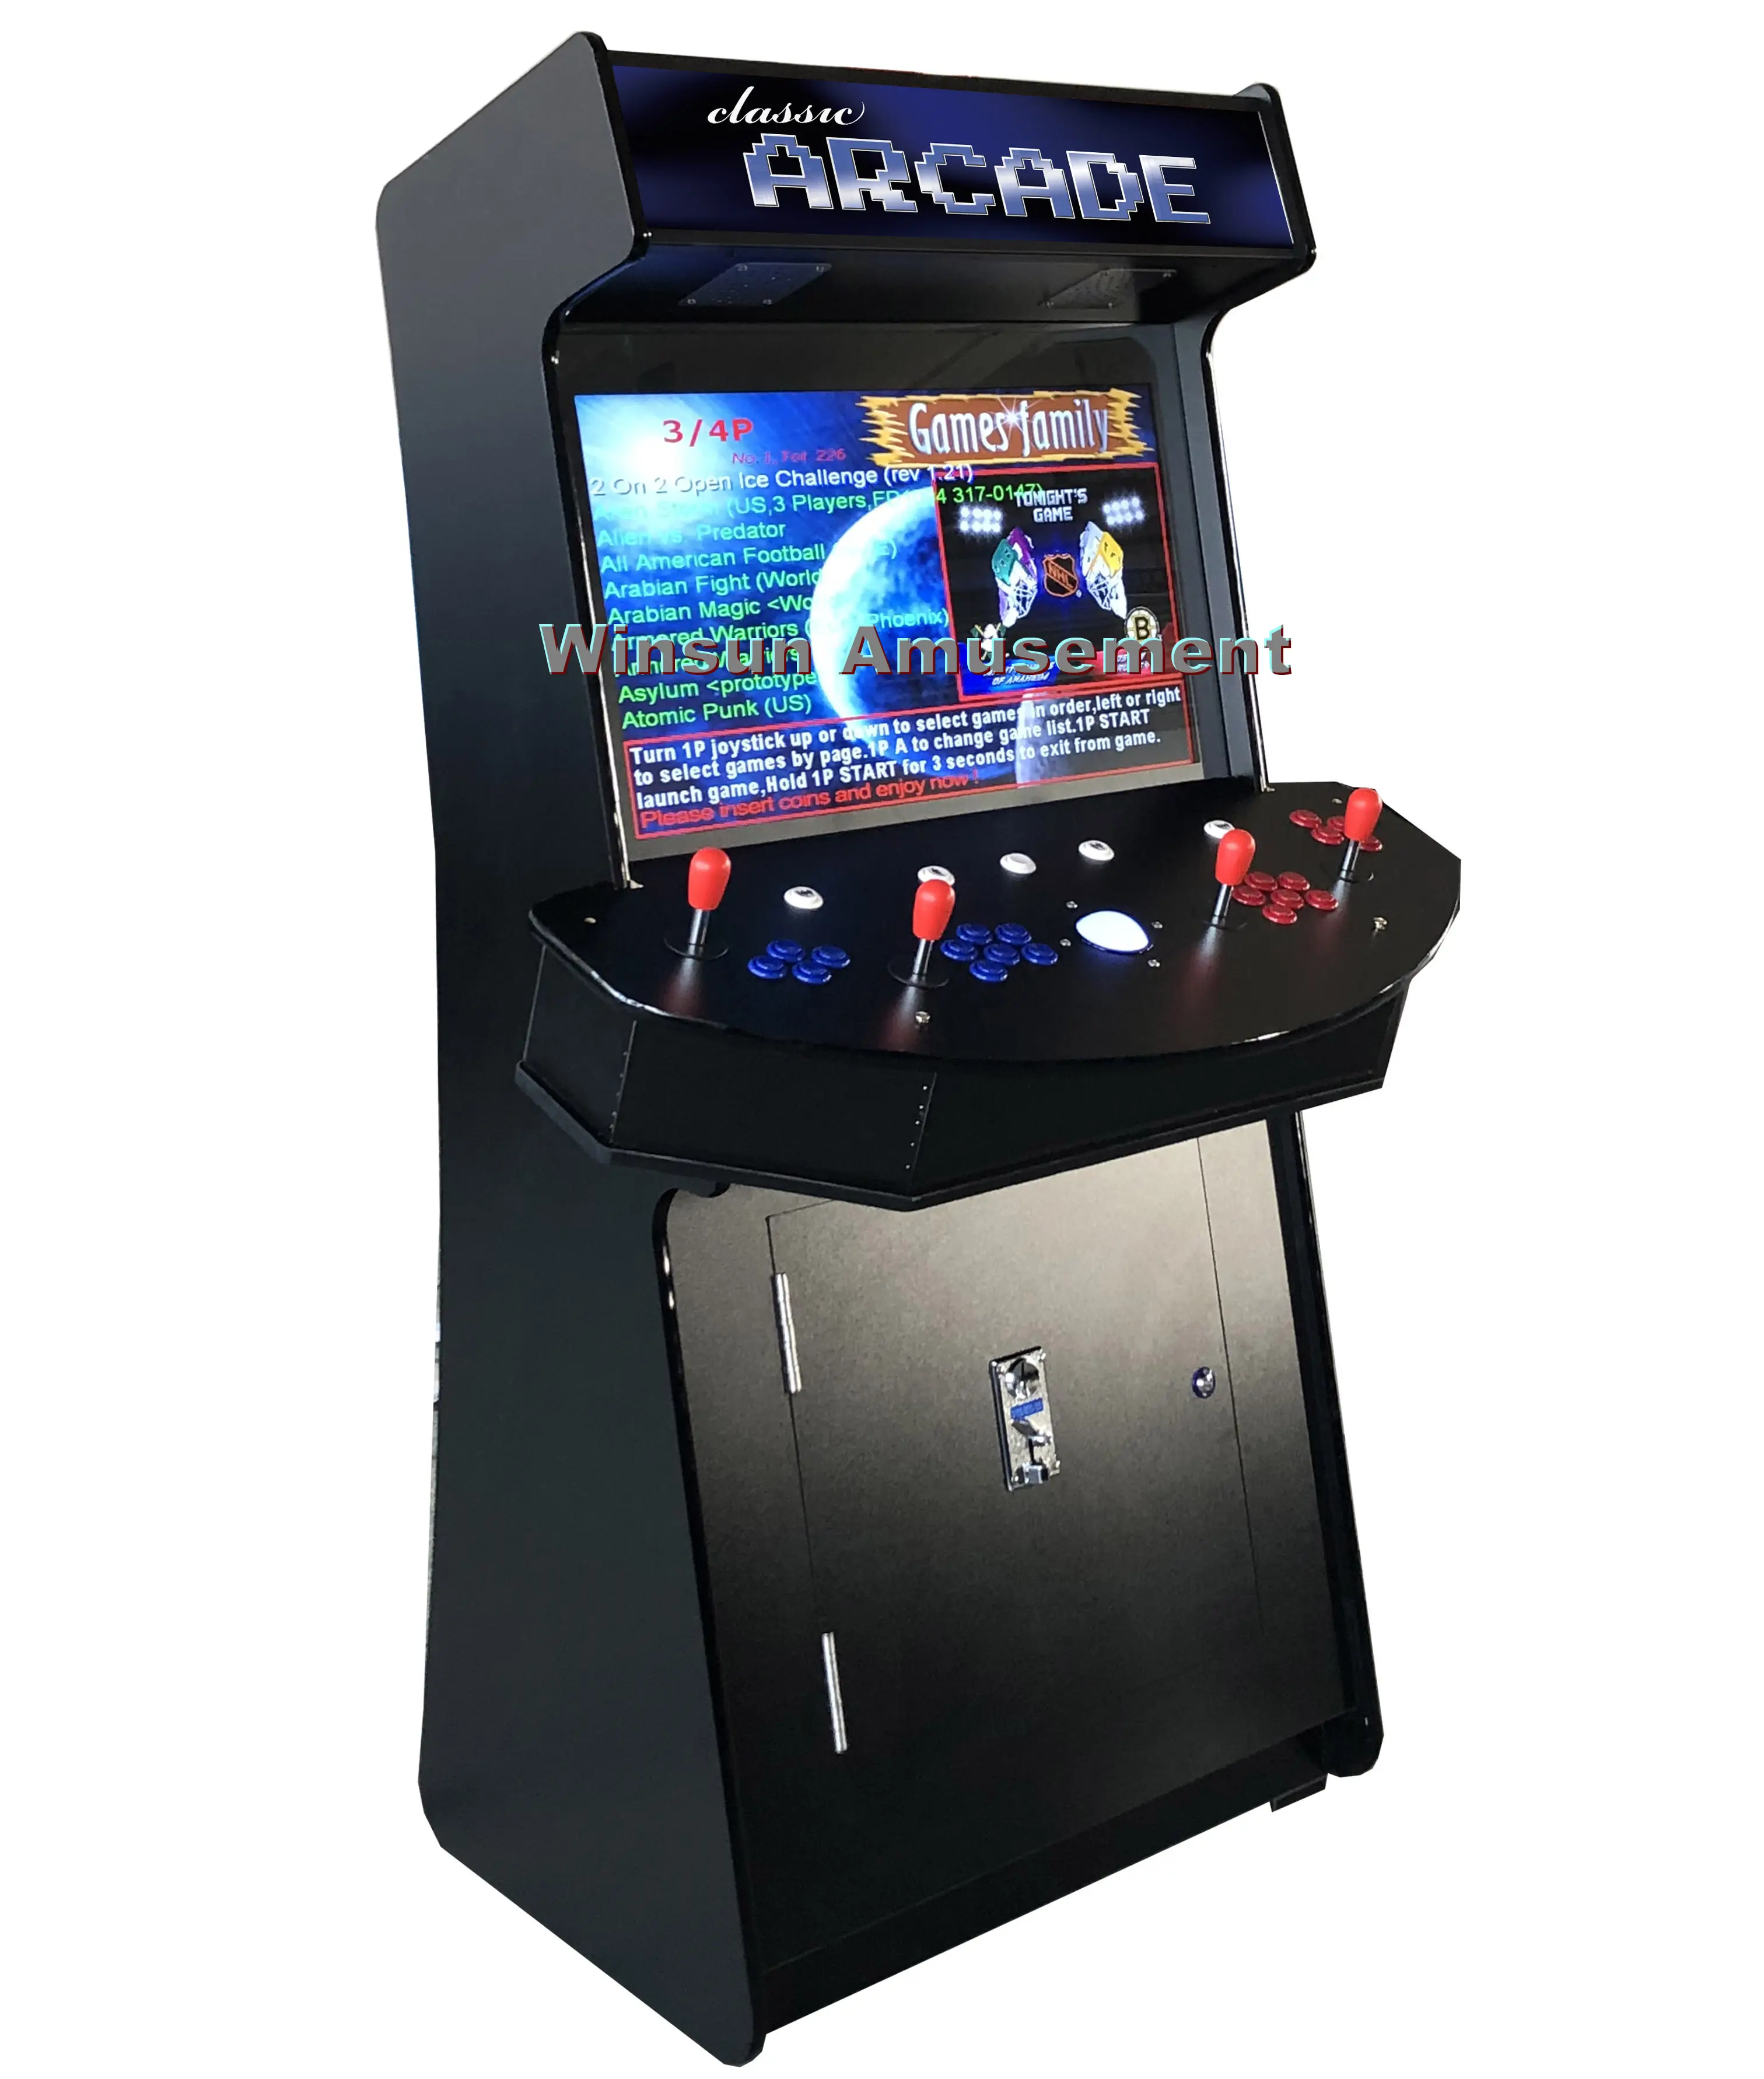 4 Spelers Slanke Rechtop Arcade Machine Met 3500 Games En Grote Trackball